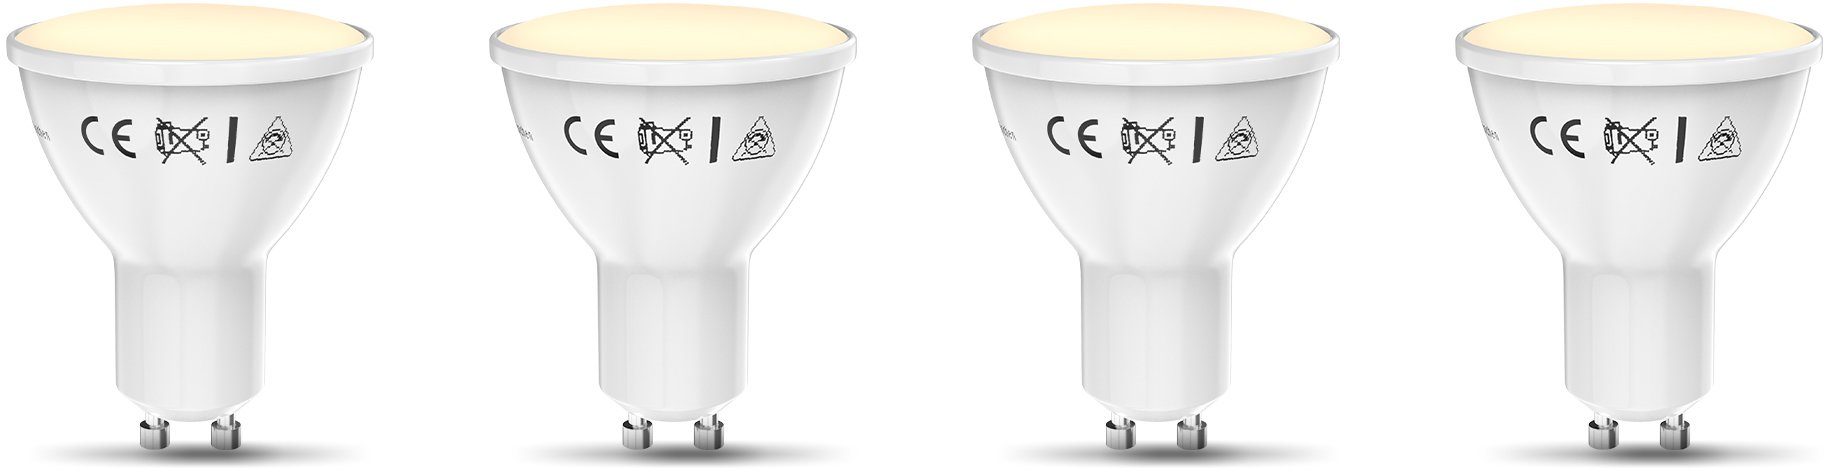 B.K.Licht LED-Leuchtmittel, dimmbar St., LED-Lampe, RGB, GU10, Warmweiß, WiFi, Smart Home App-Steuerung, 4